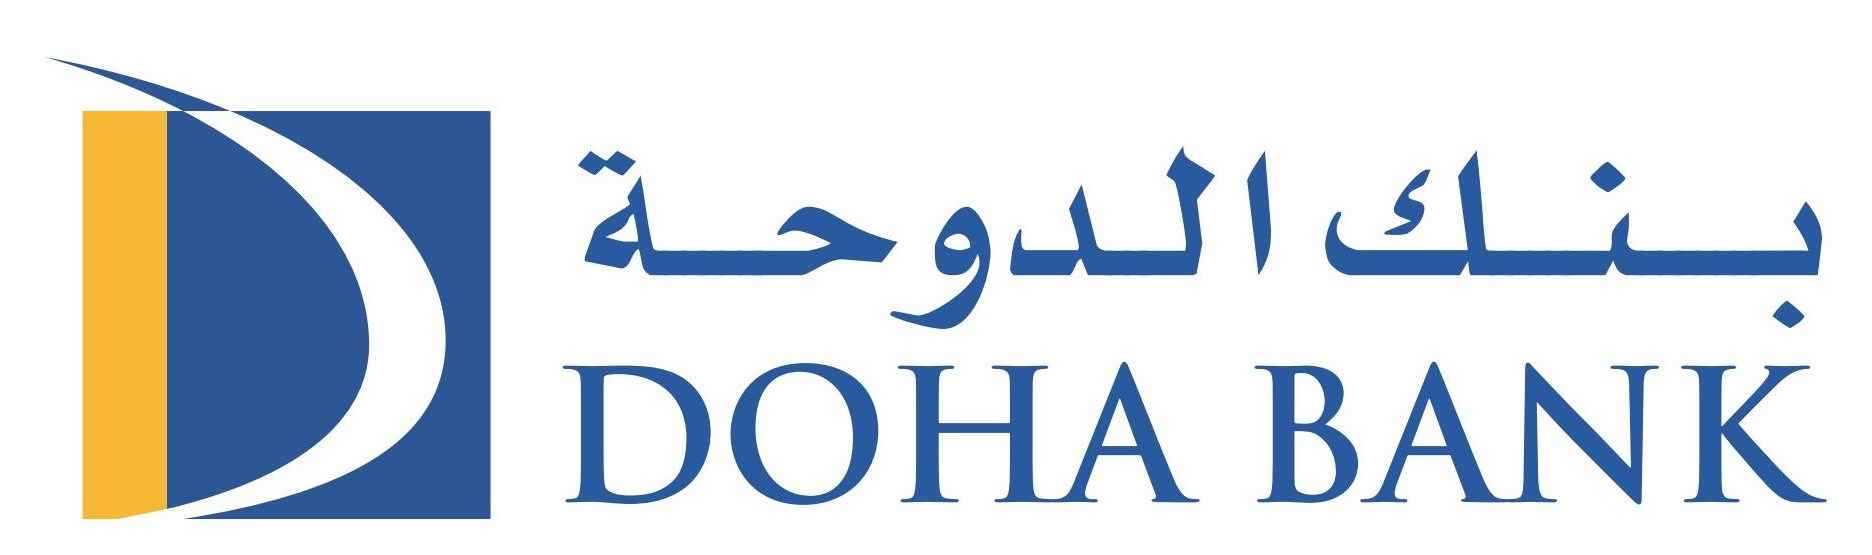 Doha Bank Logo png